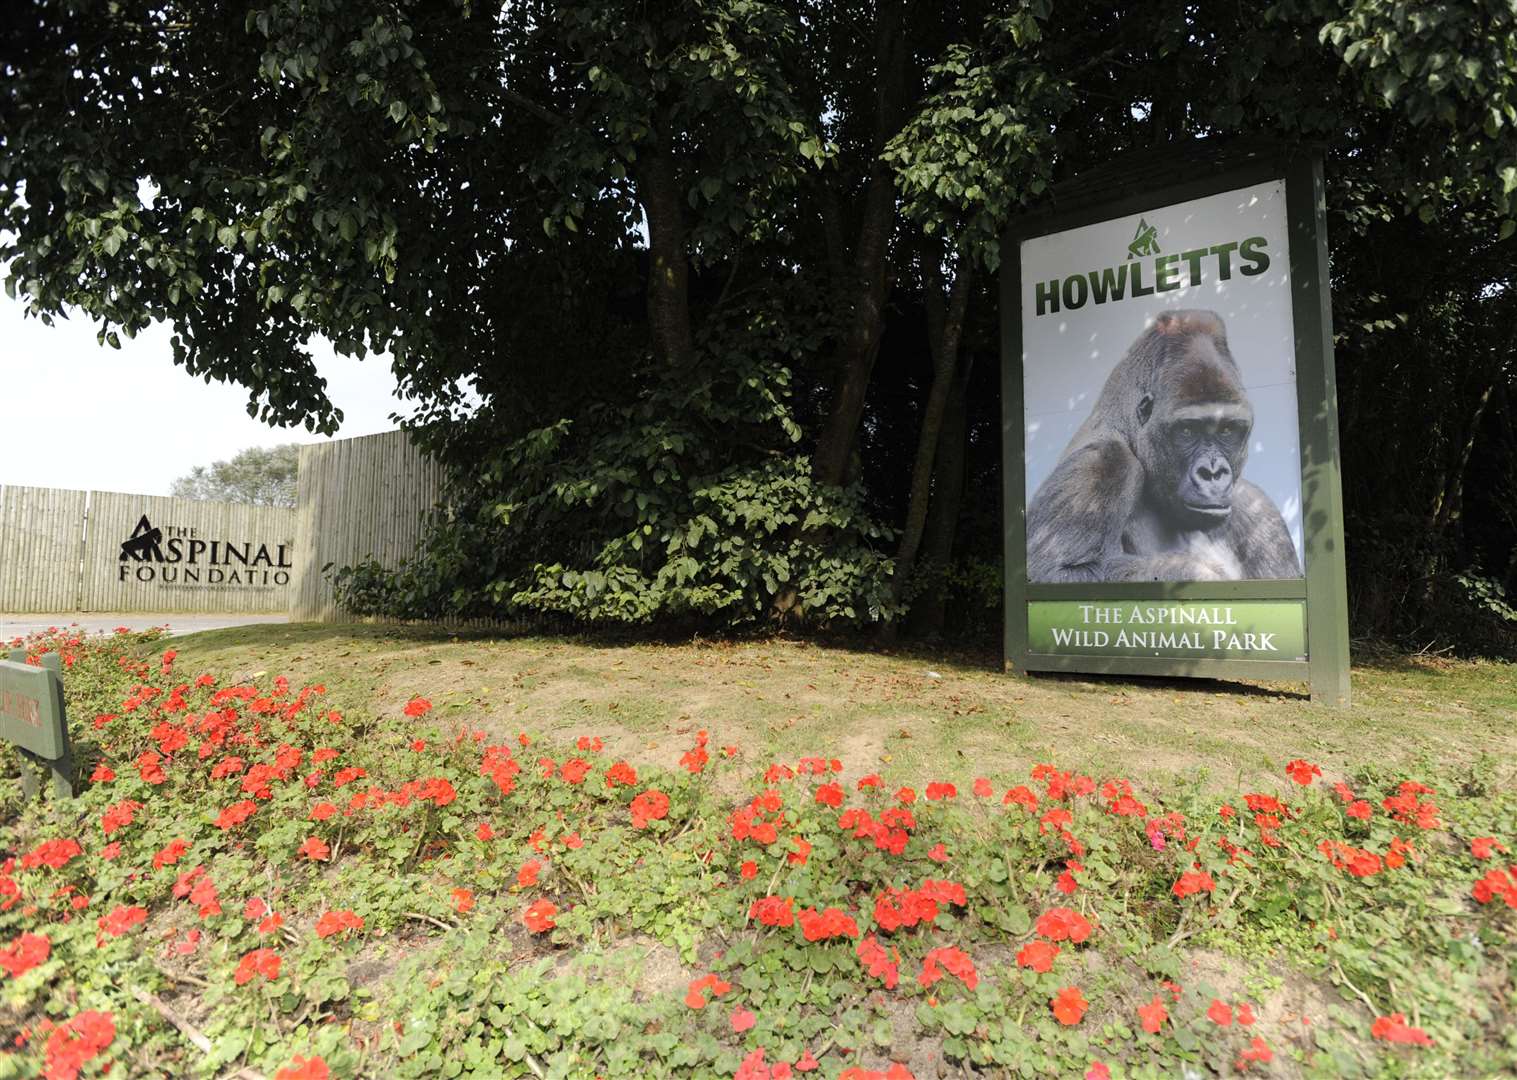 The gorillas are at Howletts Wild Animal Park in Bekesbourne